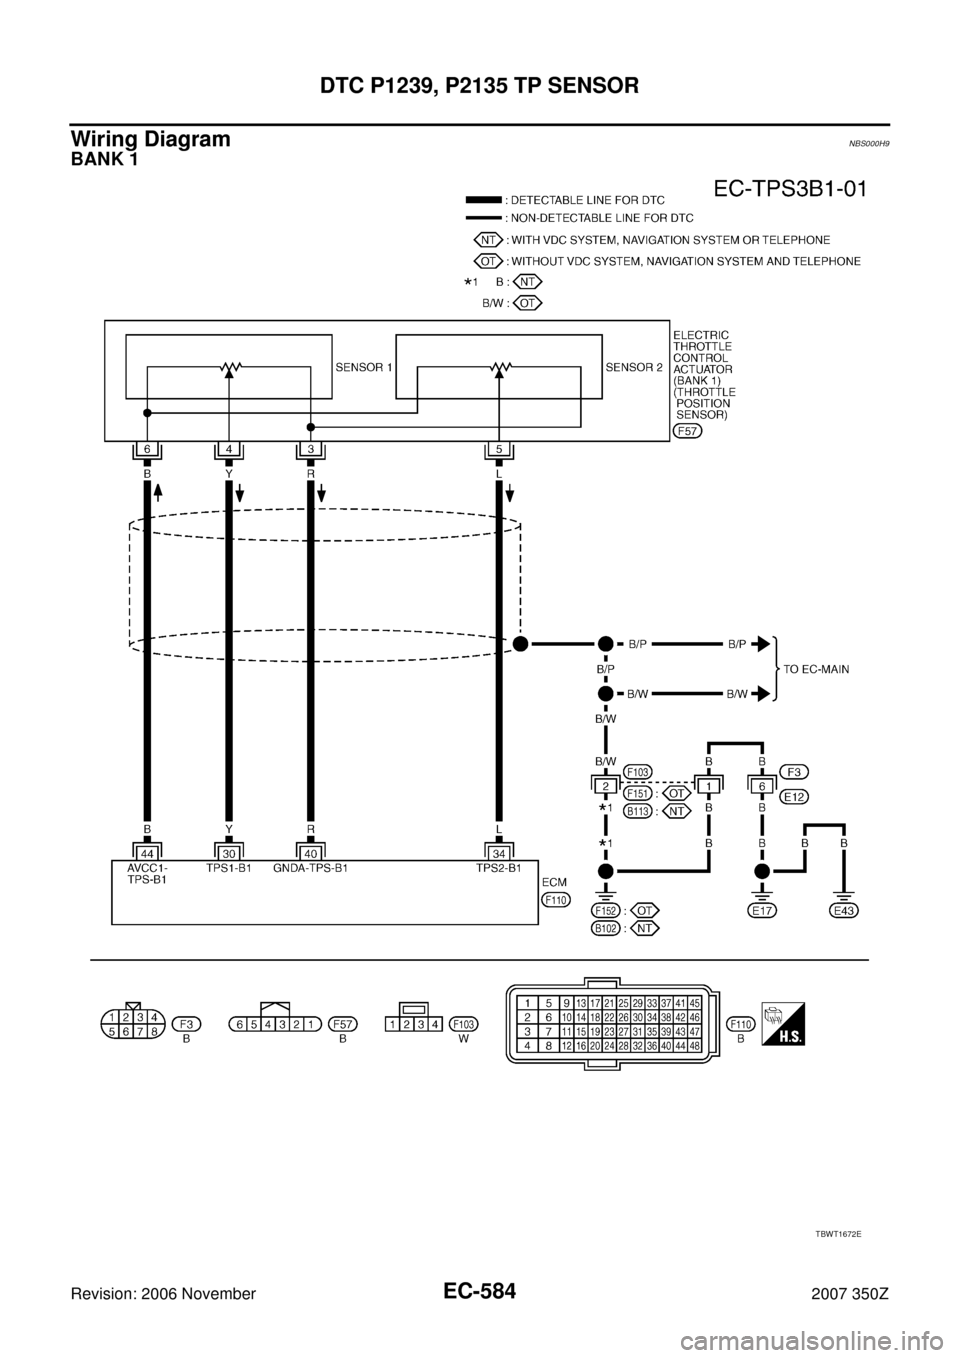 NISSAN 350Z 2007 Z33 Engine Control Workshop Manual EC-584
DTC P1239, P2135 TP SENSOR
Revision: 2006 November2007 350Z
Wiring DiagramNBS000H9
BANK 1
TBWT1672E 